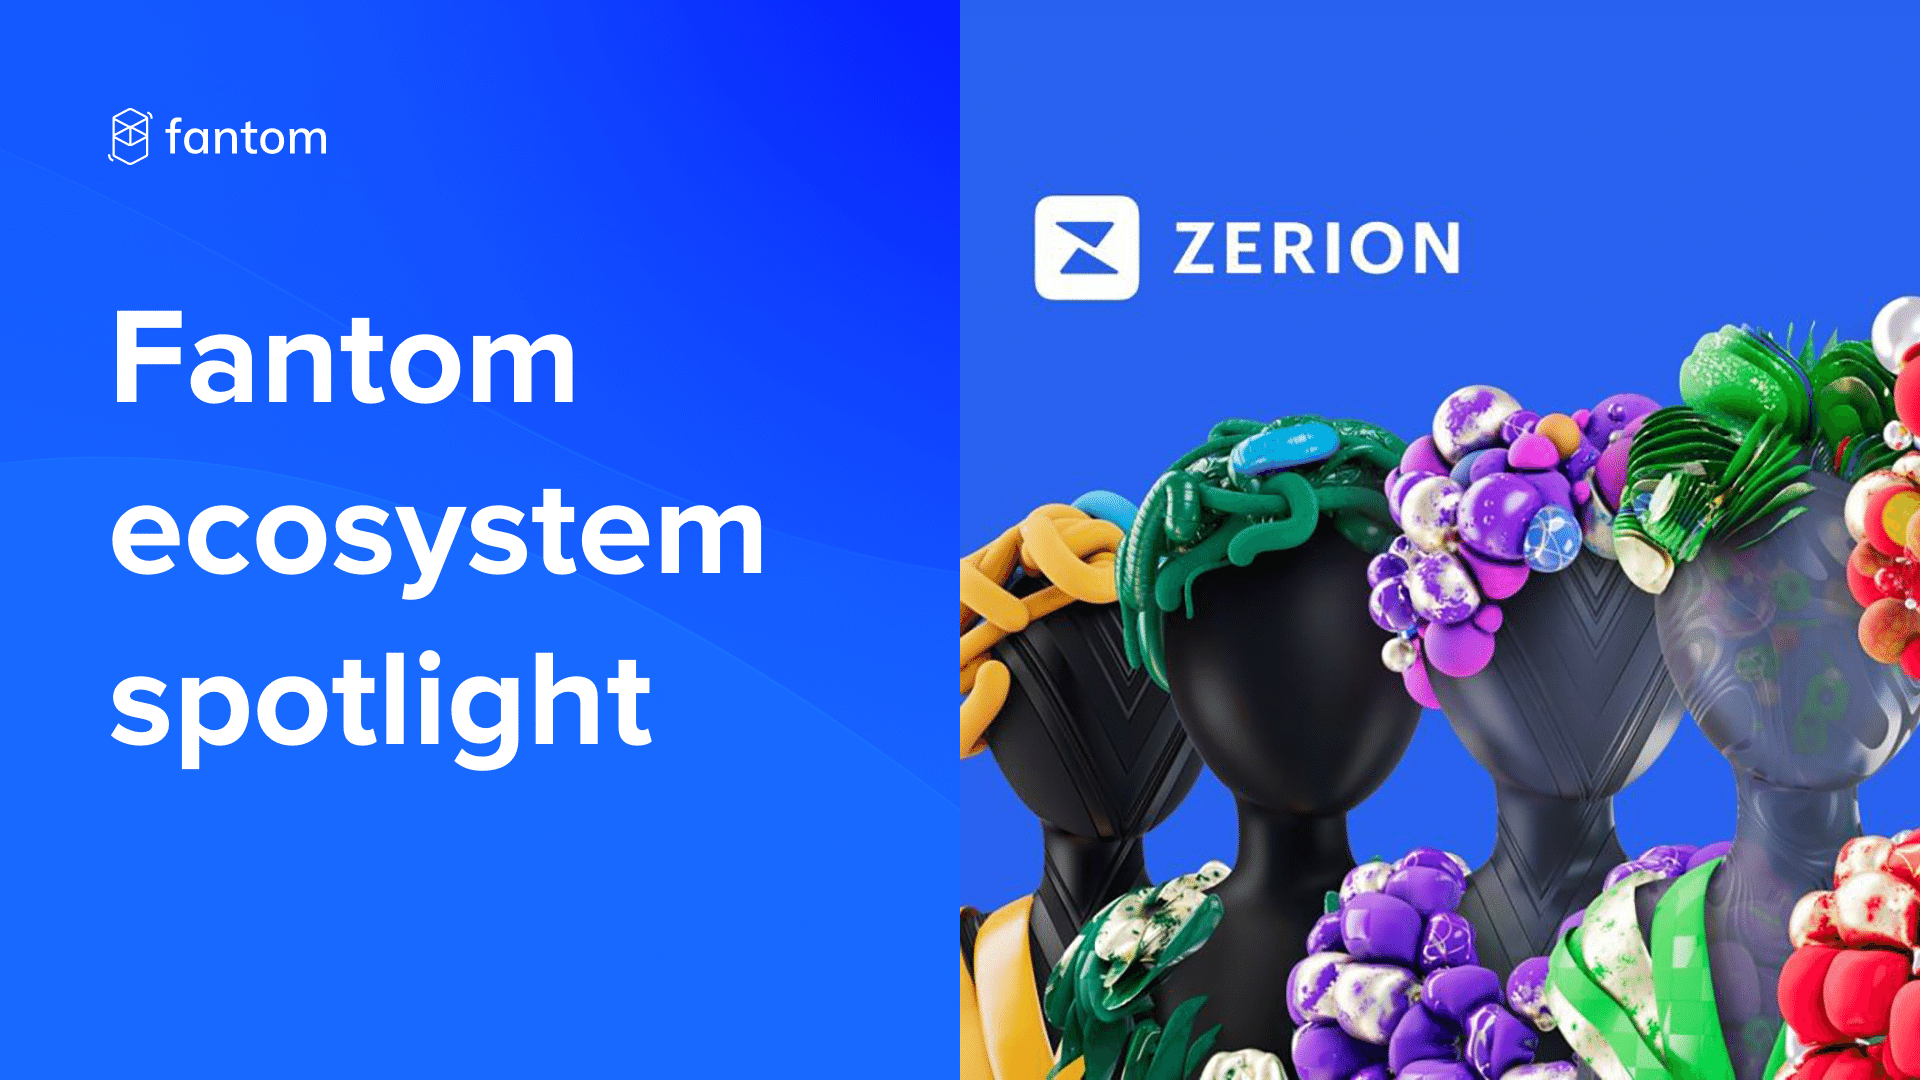 Fantom Ecosystem Spotlight – Zerion